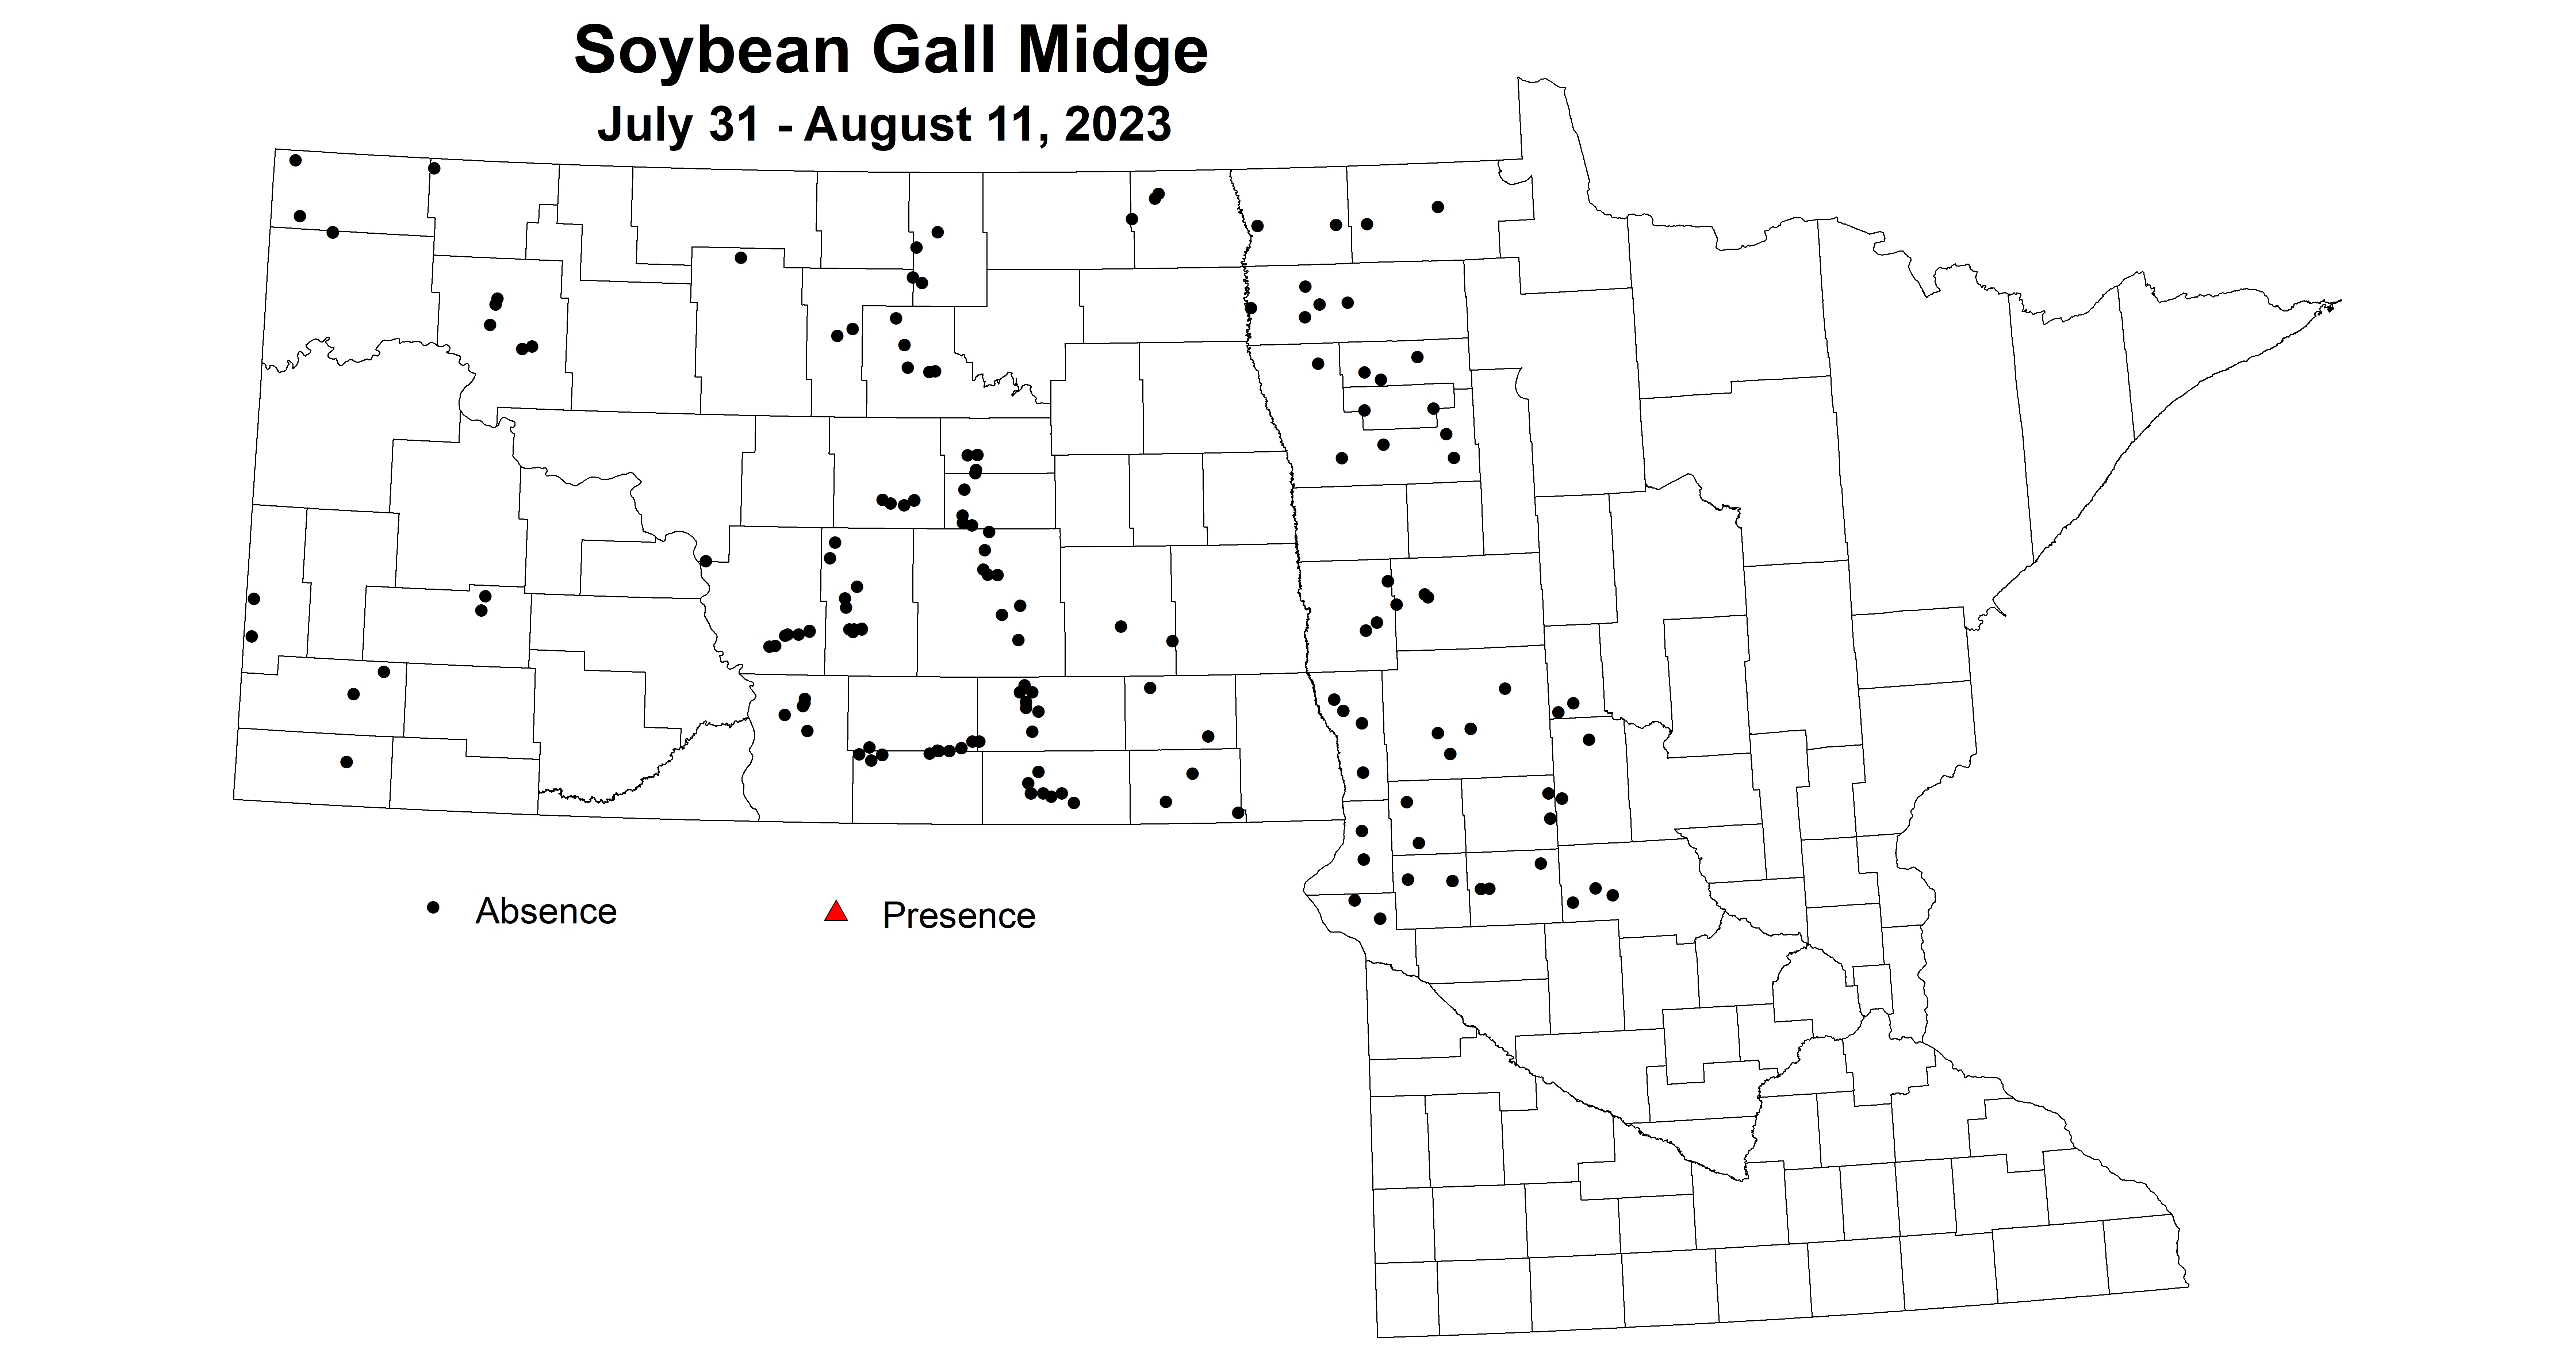 soybean gall midge 7.31-8.11 2023